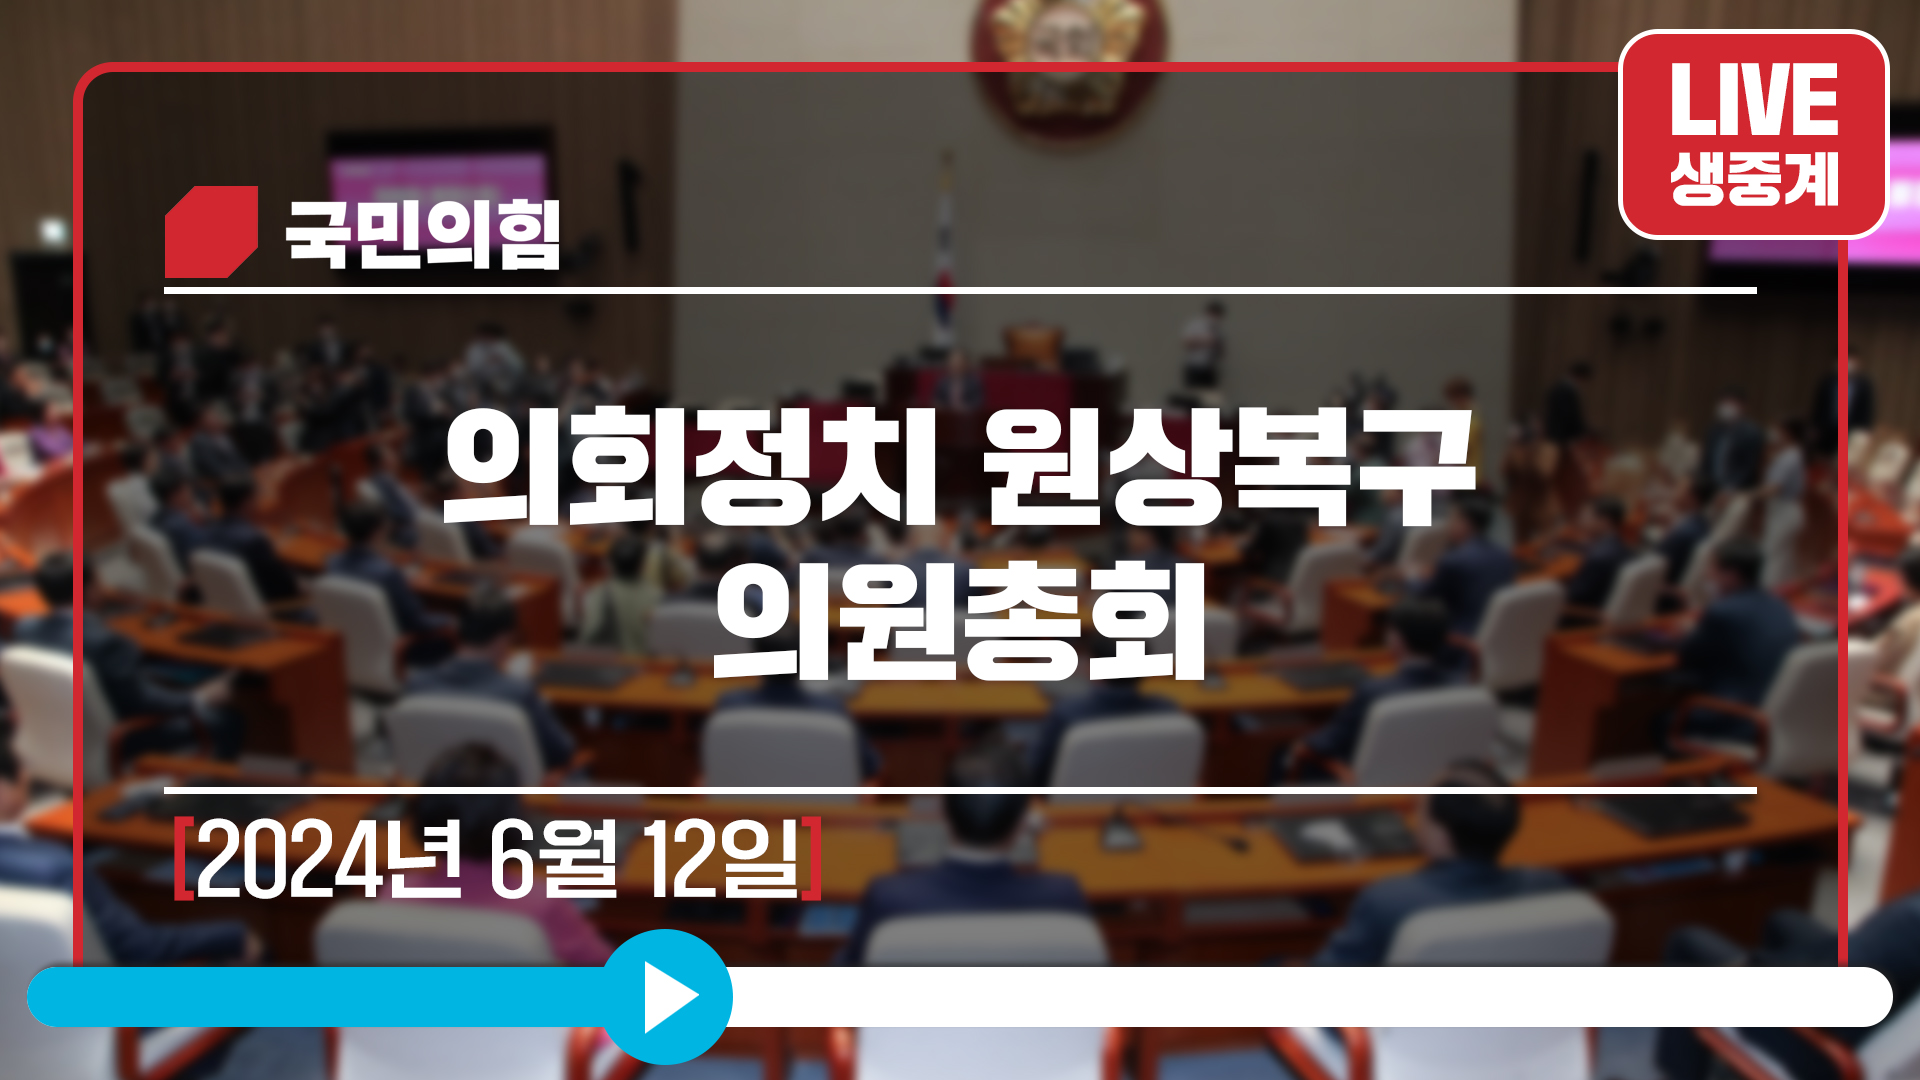 [Live] 6월 12일 의회정치 원상복구 의원총회